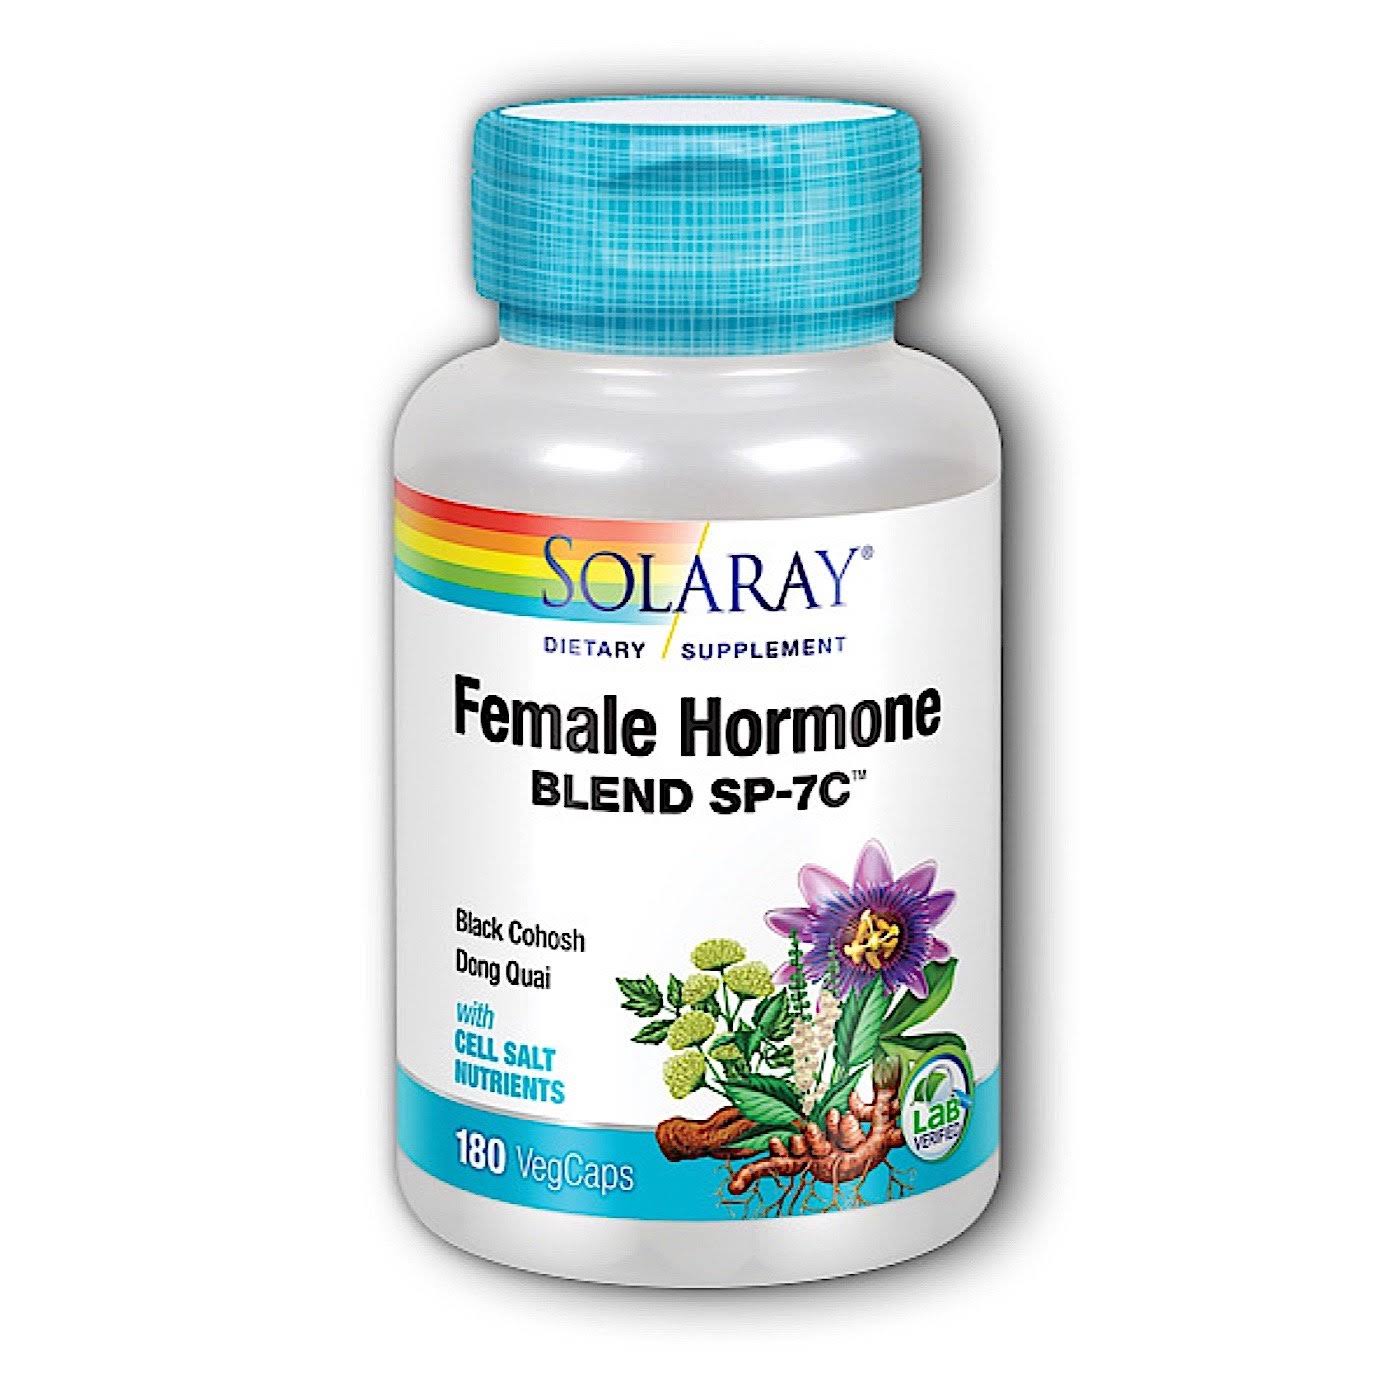 Solaray Female Hormone Blend Black Cohosh - 100ct